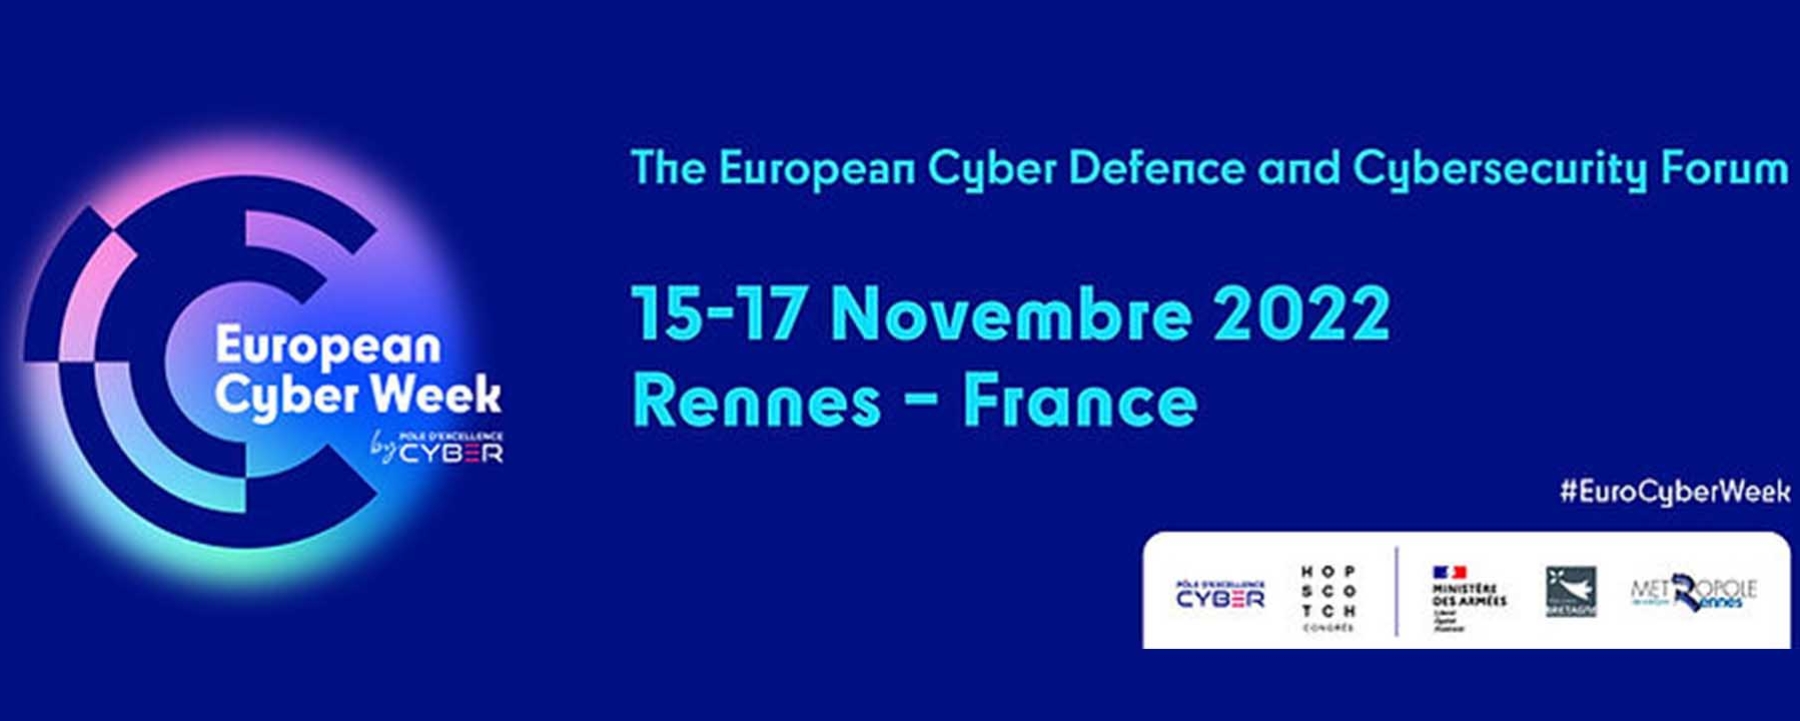 european cyber week 2022